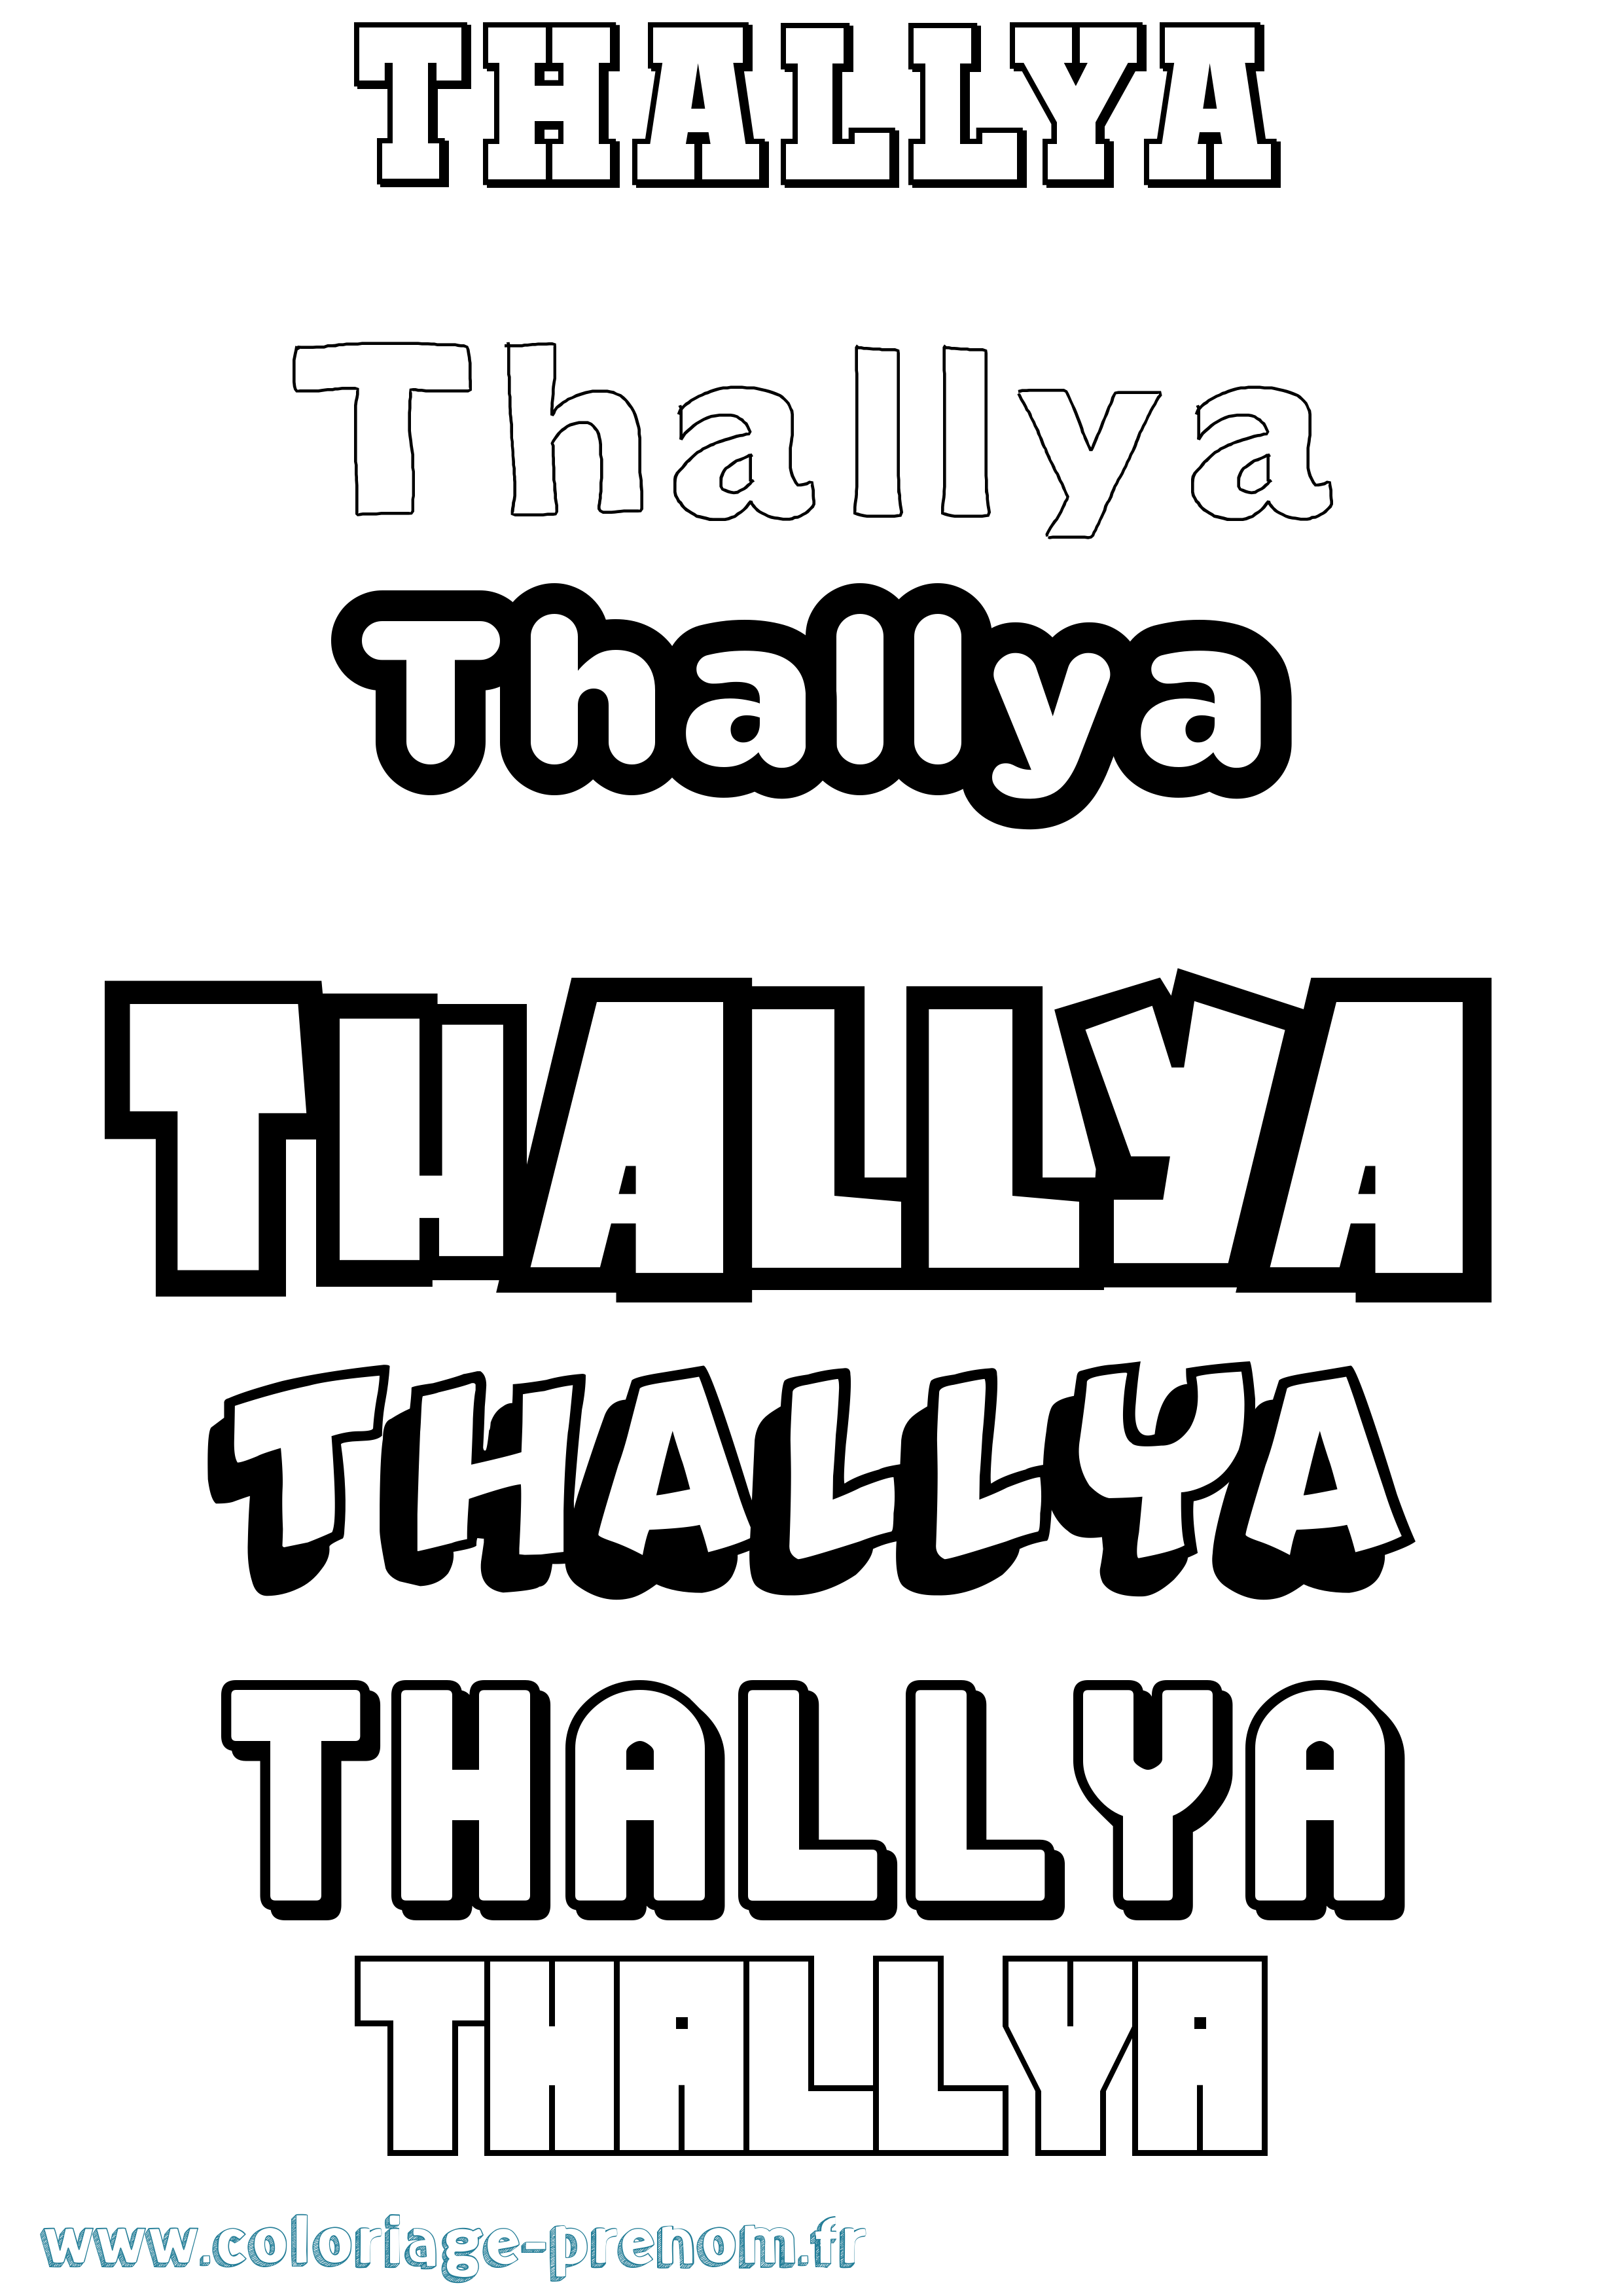 Coloriage prénom Thallya Simple